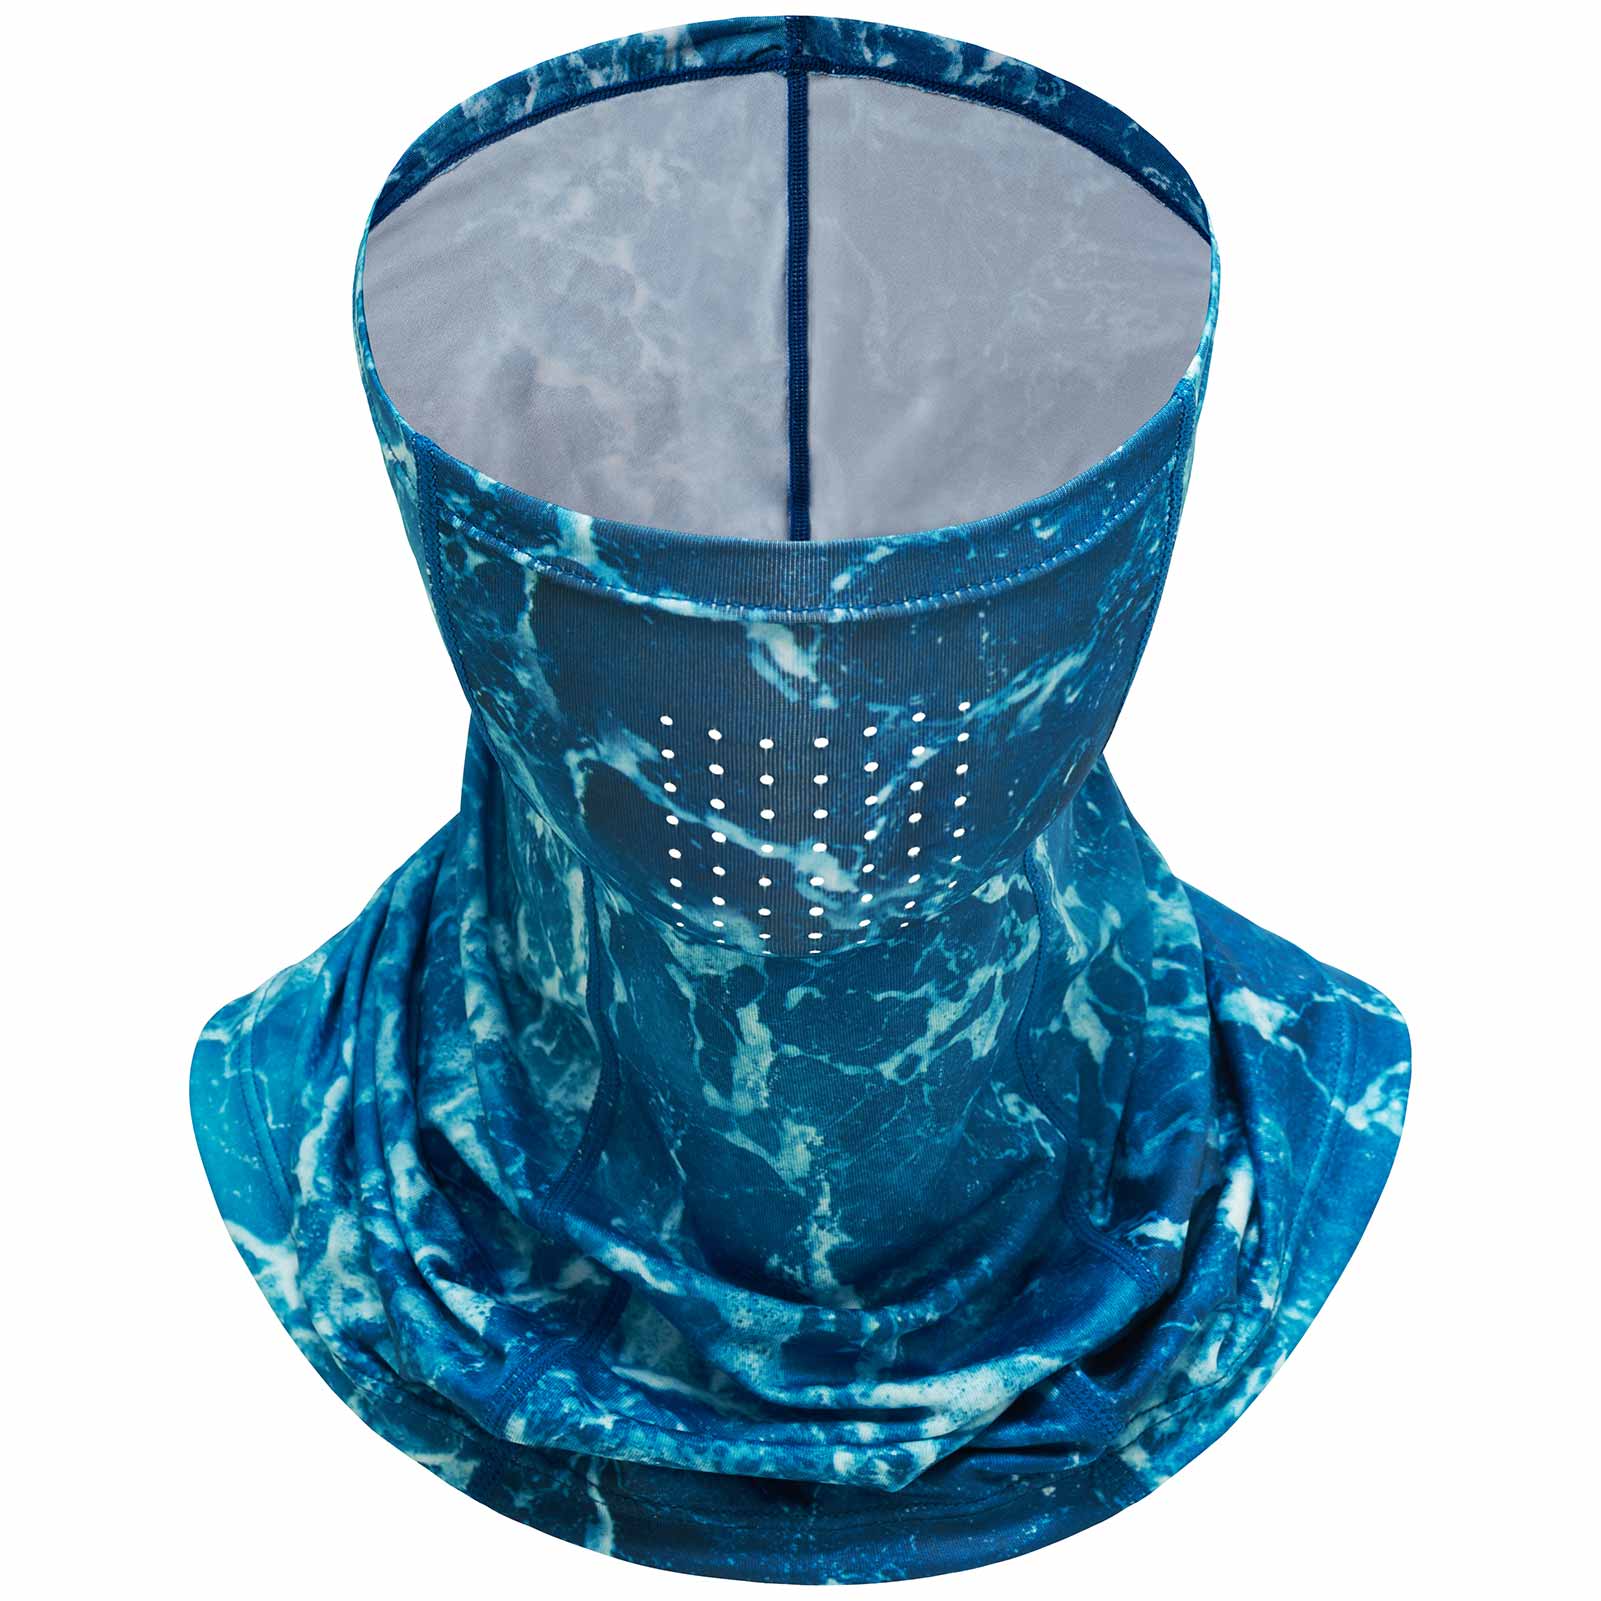 BUFF UVX Mask and UVX Balaclava Provide Heads-Up Protection